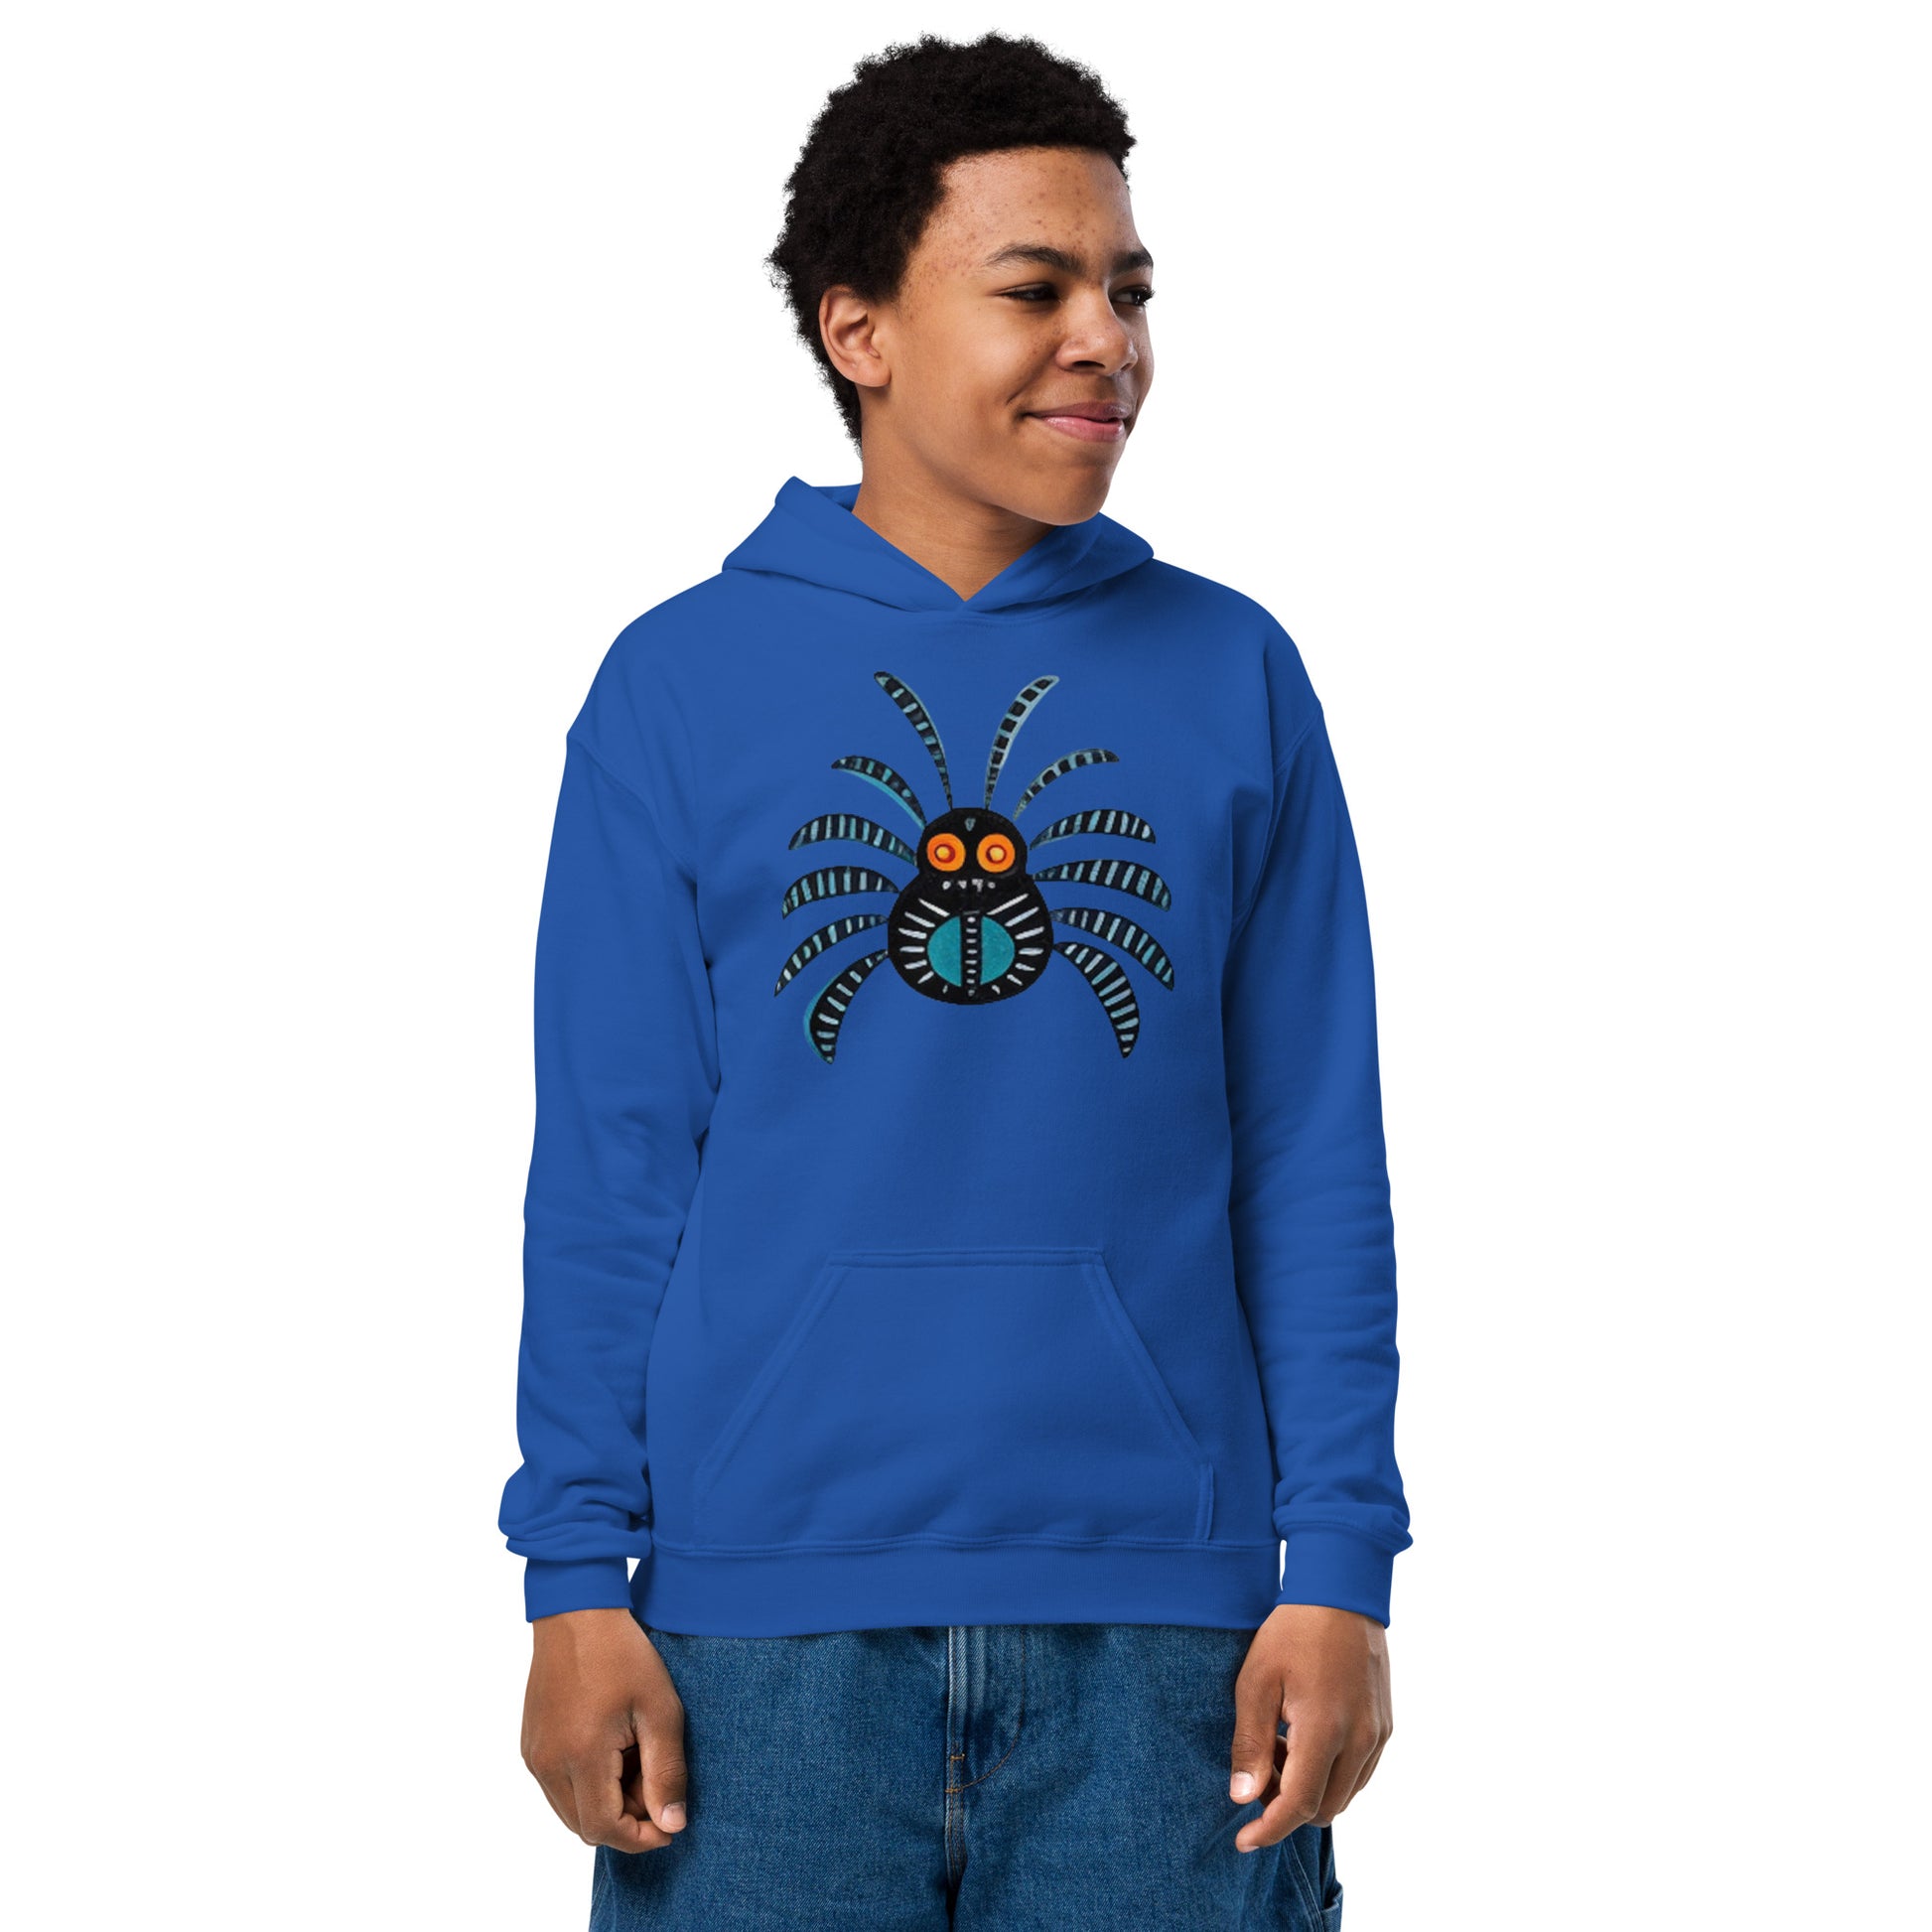 heavy Critter Spider Youth – k2r2 #02 blend Striped design hoodie